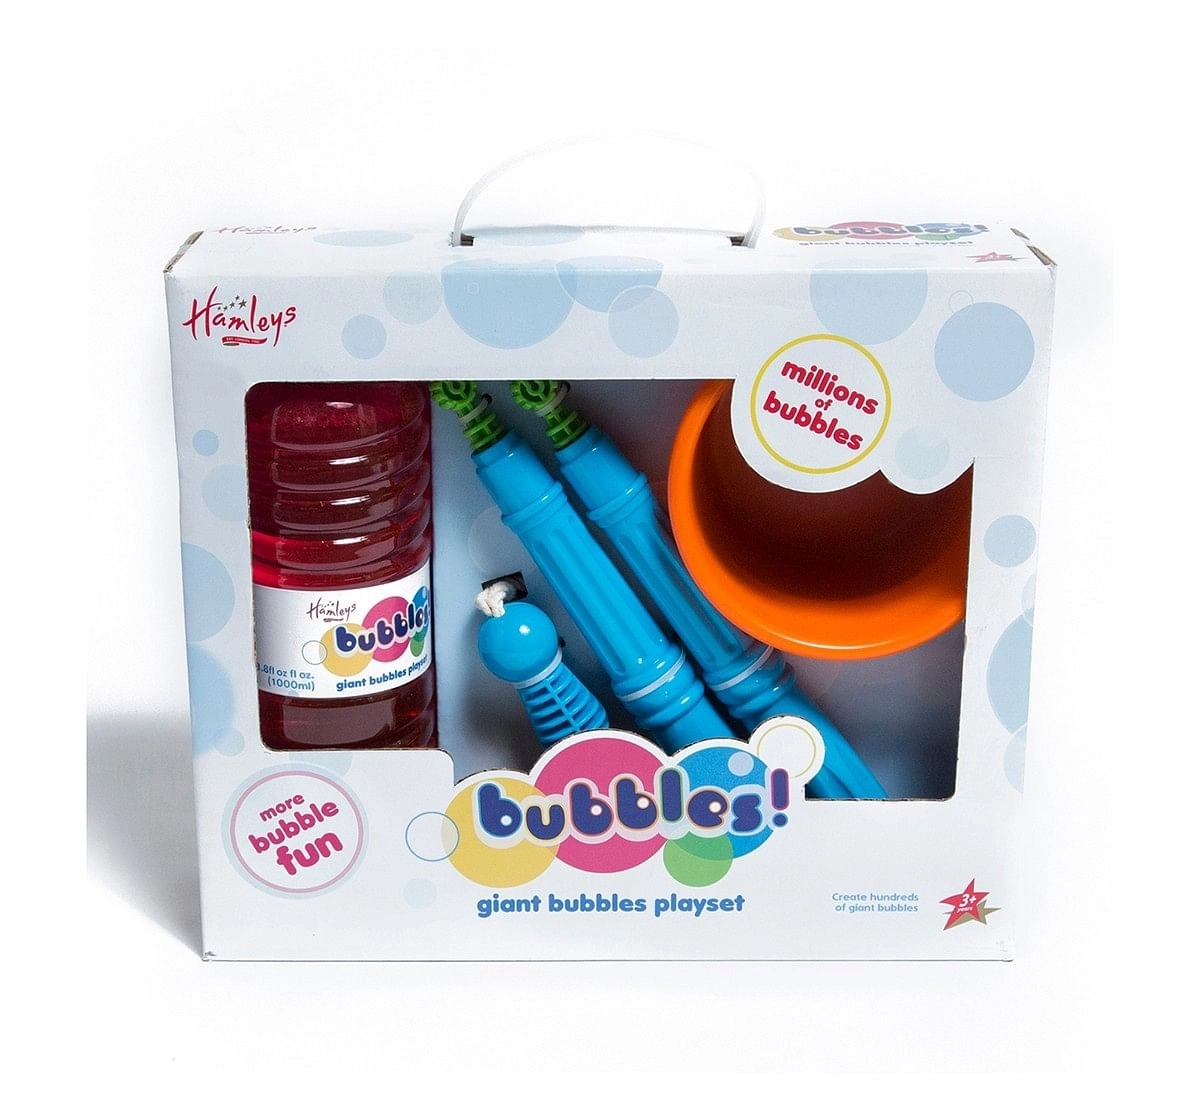 Hamleys Giant Bubble Play Set Impulse Toys for Kids age 3Y+ 